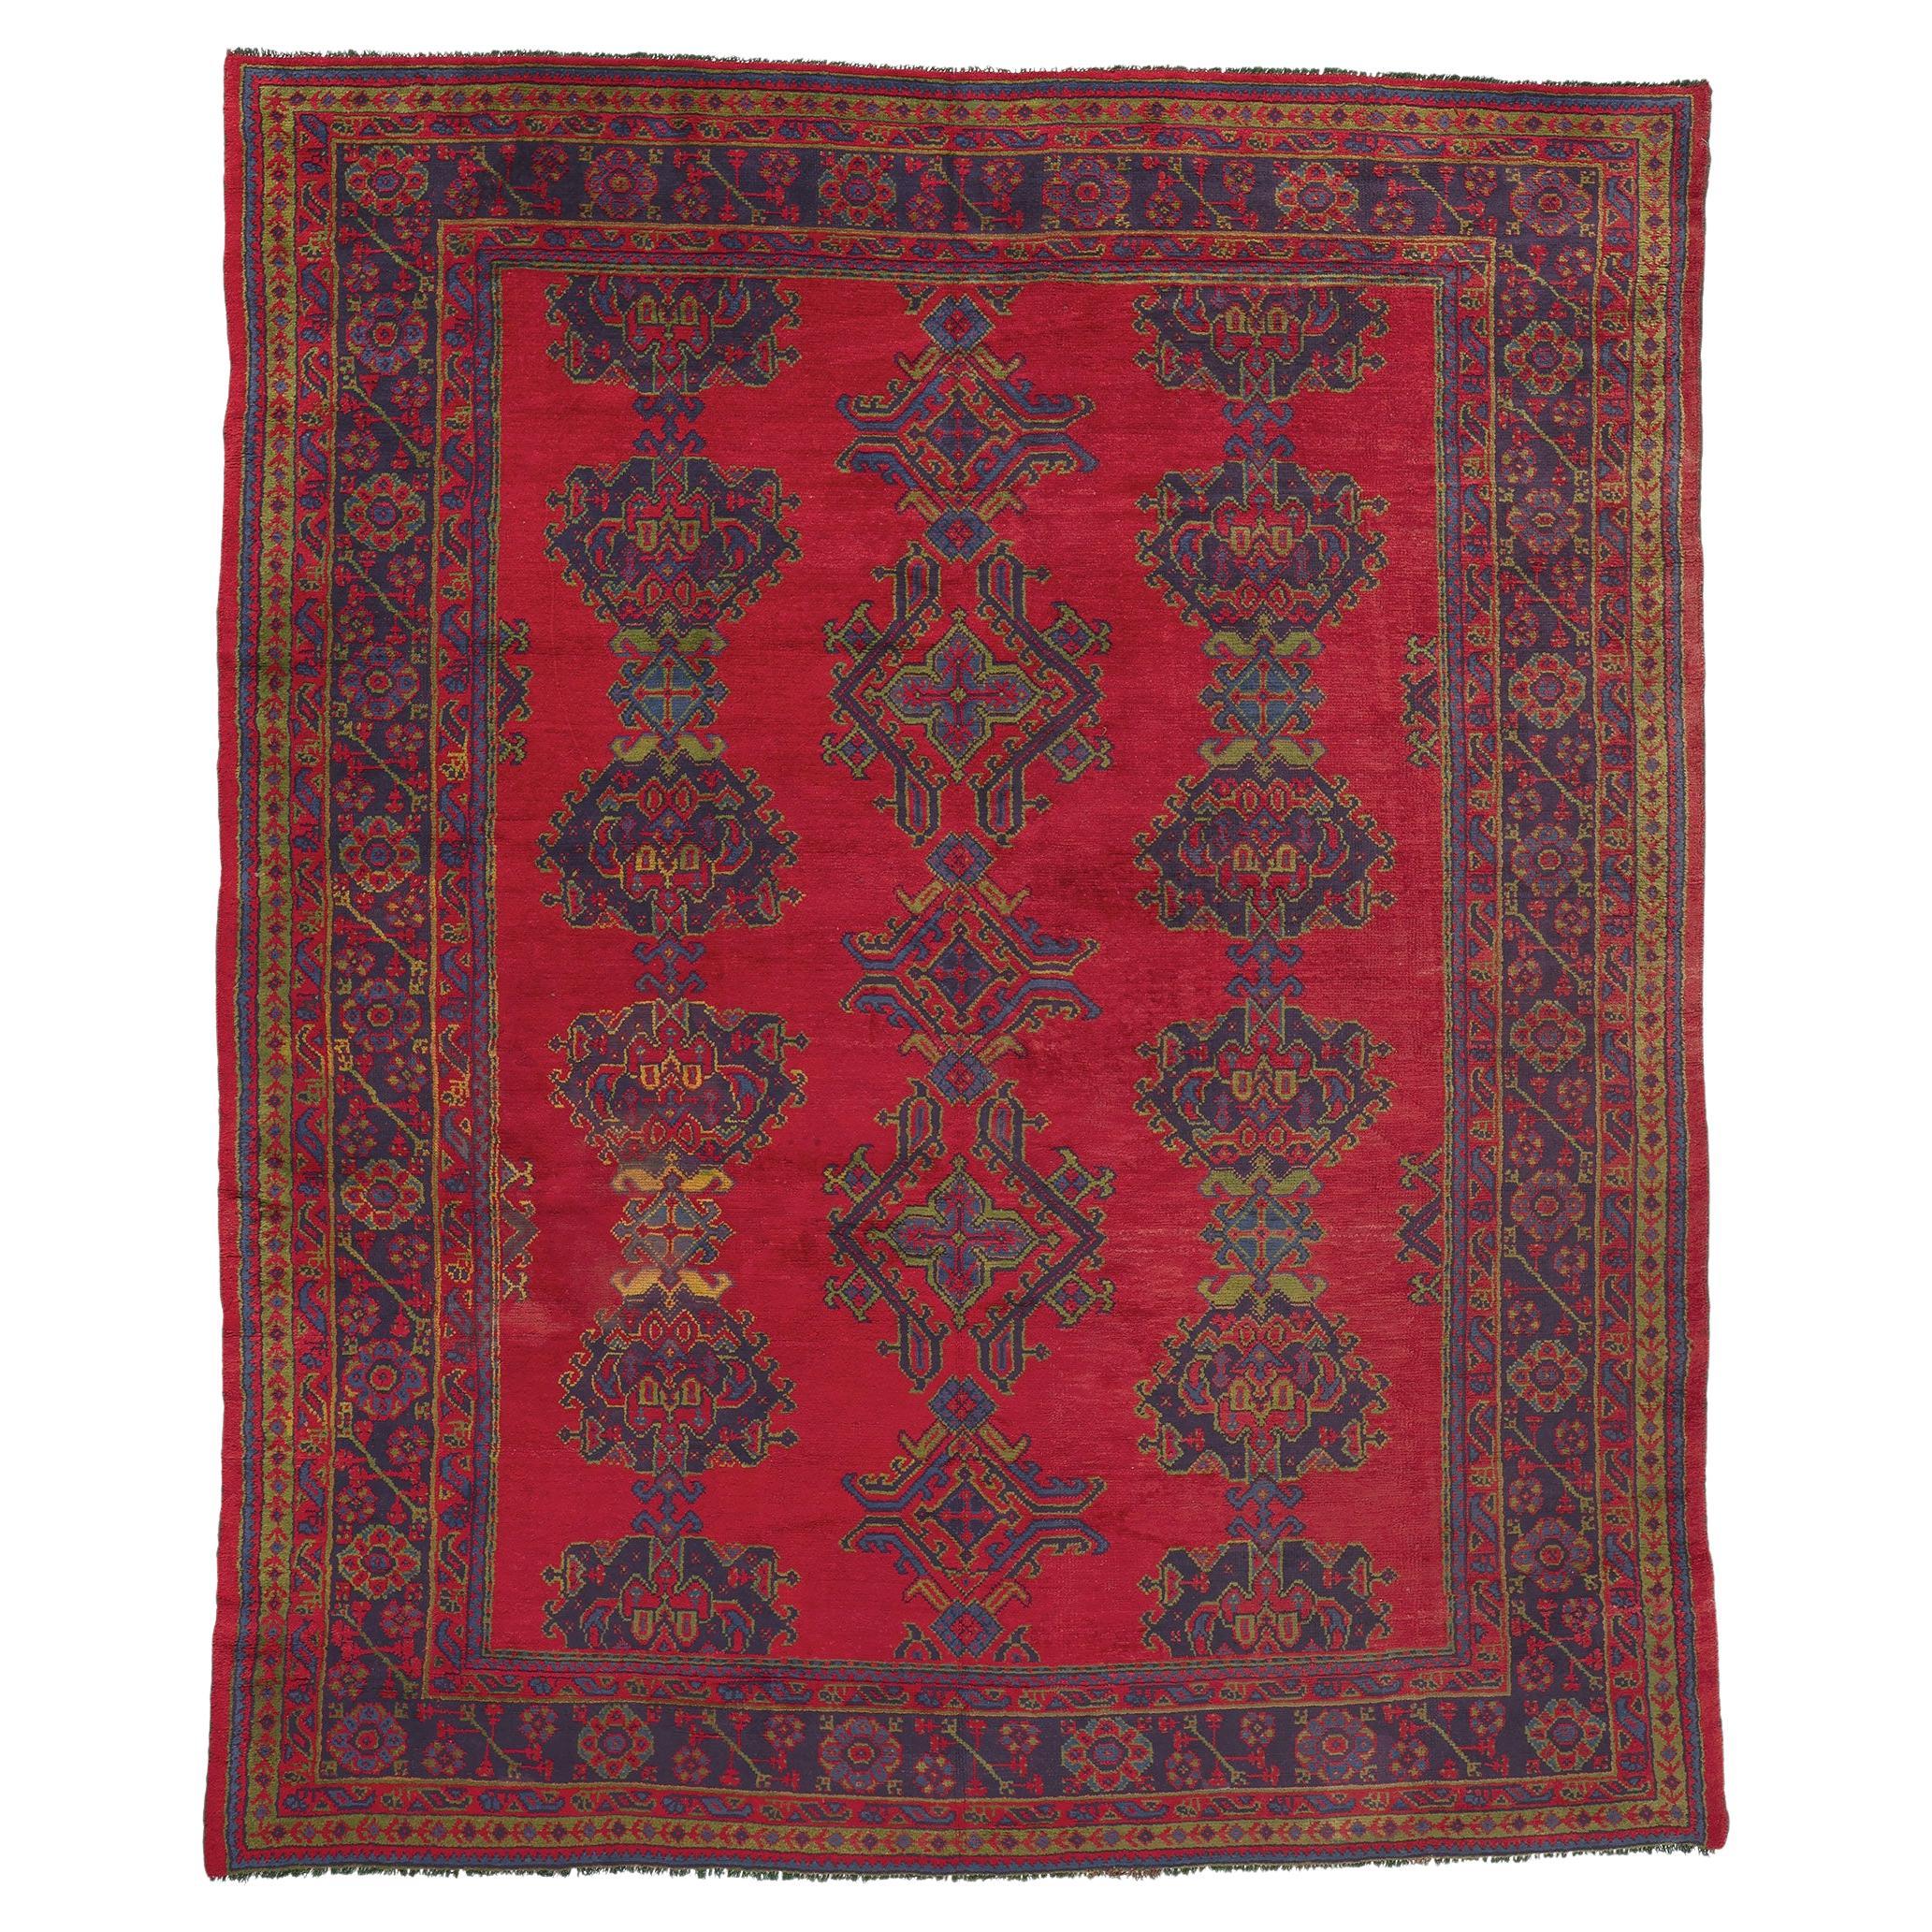 Antique Red Turkish Oushak Rug